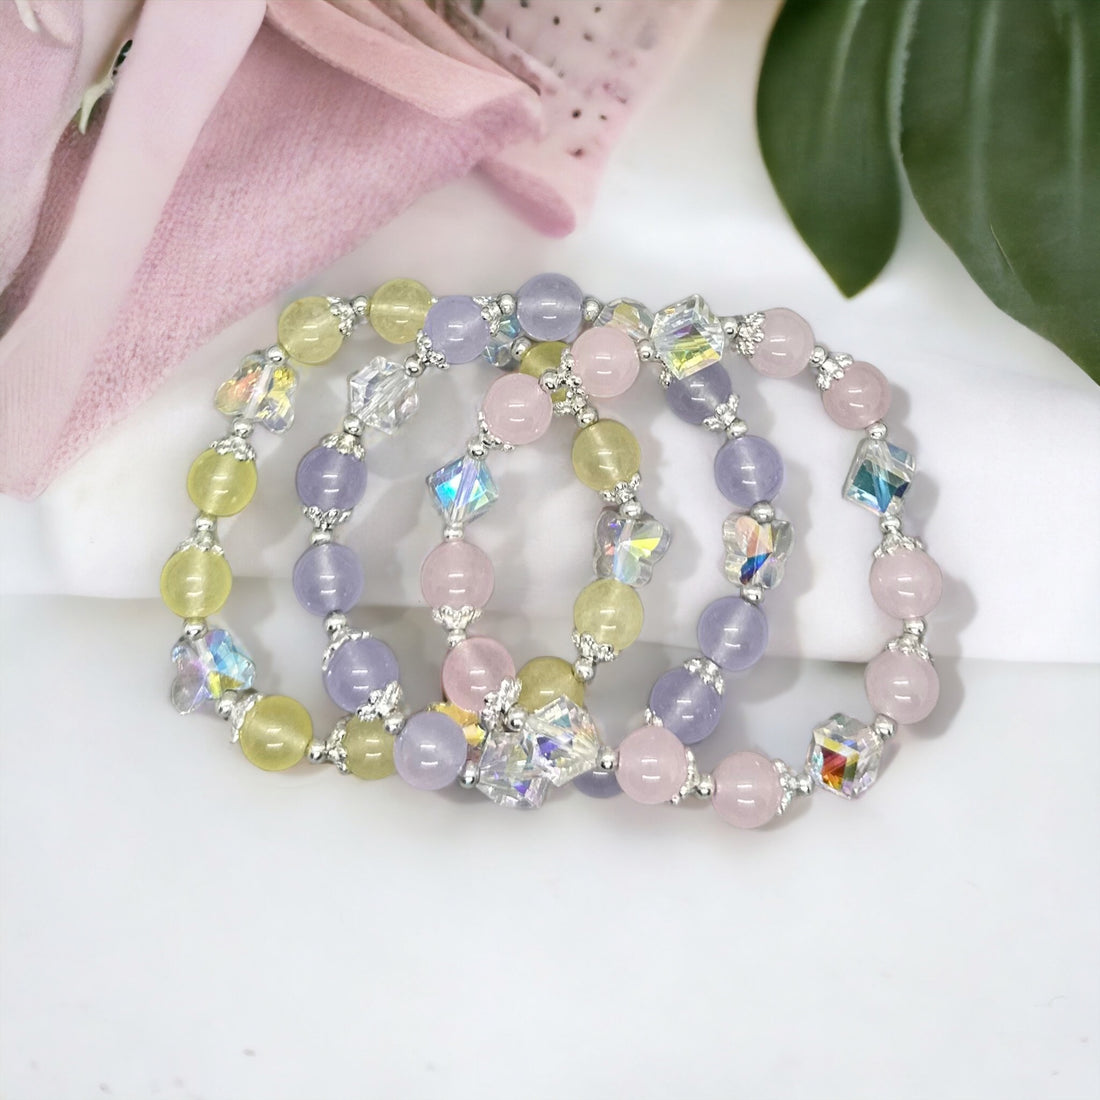 Crystal Beads Clear Shiny Butterfly Shaped Beads Handmade Bracelet